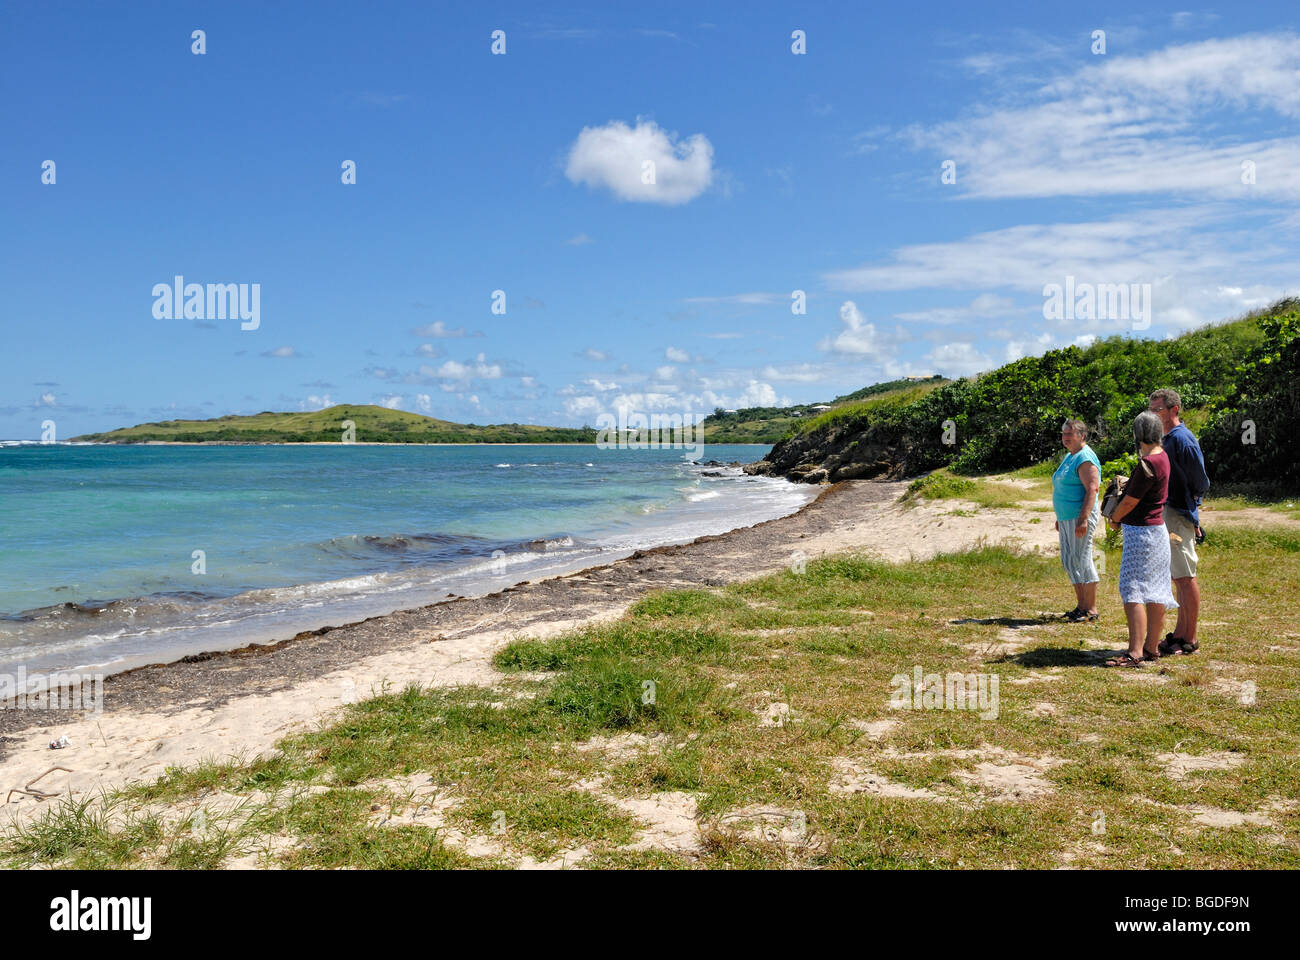 Tourists at the Salt River Bay, landing bay of Christopher Columbus, St. Croix island, U.S. Virgin Islands, United States Stock Photo